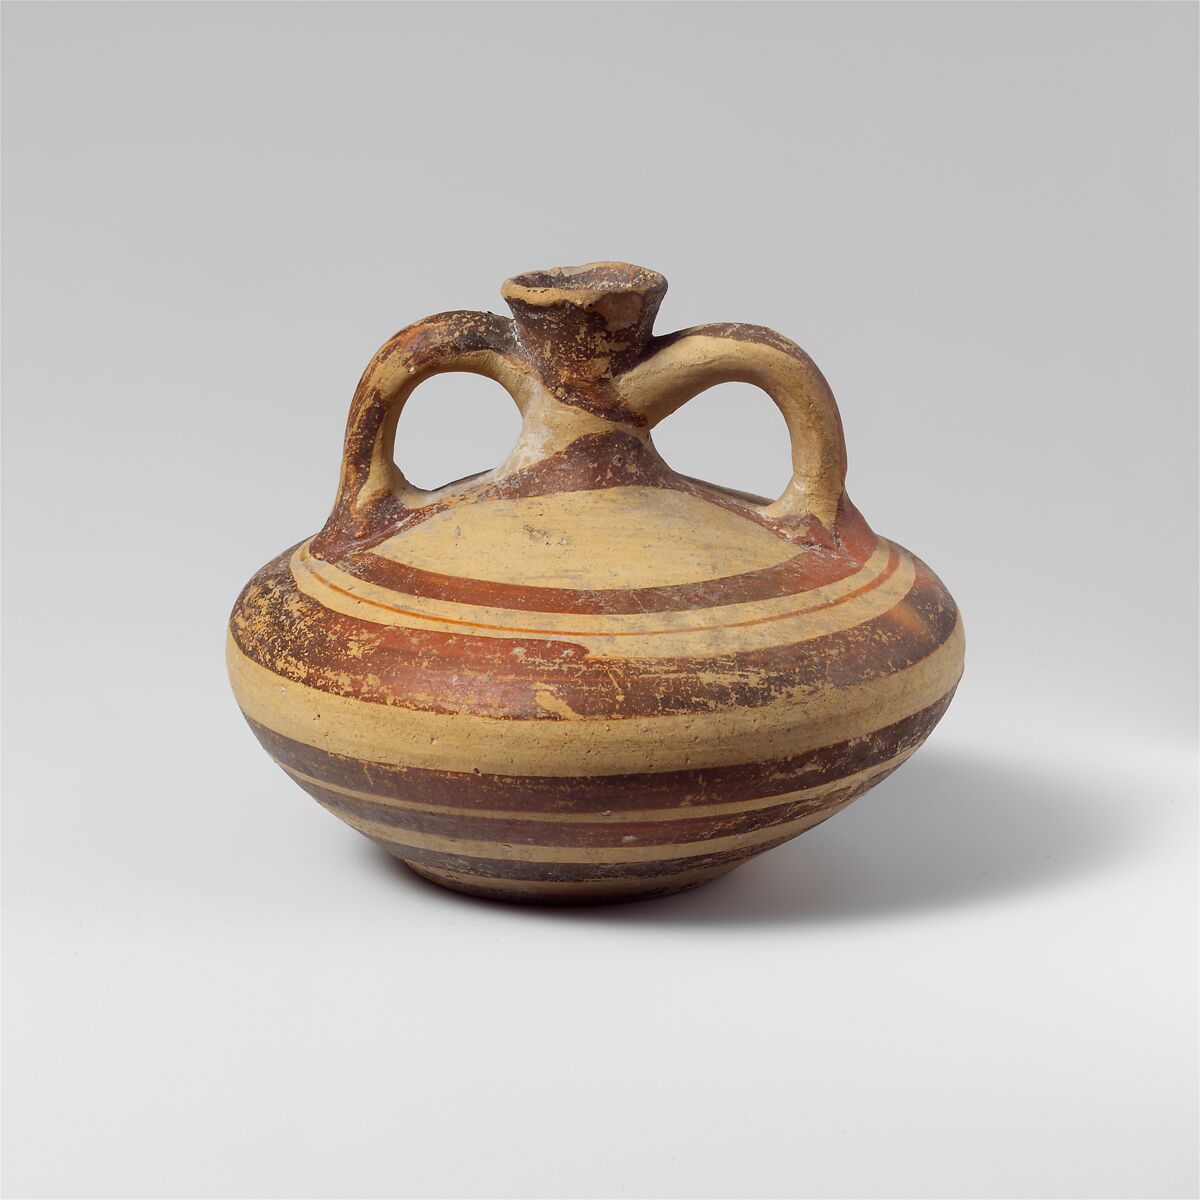 Terracotta stirrup jar, Terracotta, Cypriot 